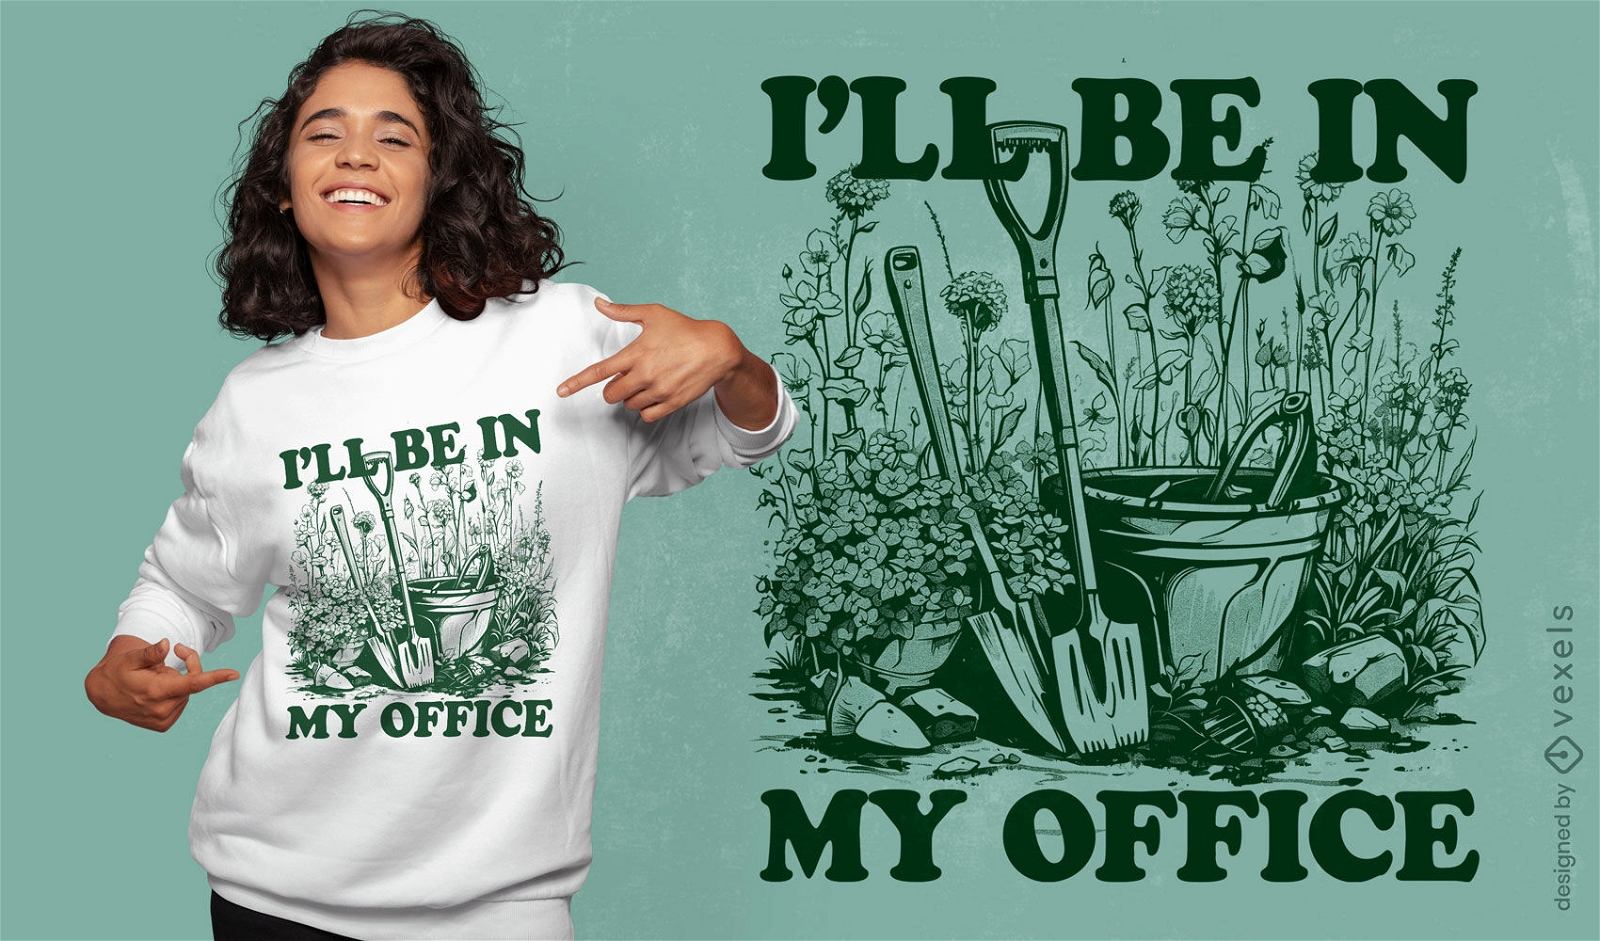 Gardening office quote t-shirt design